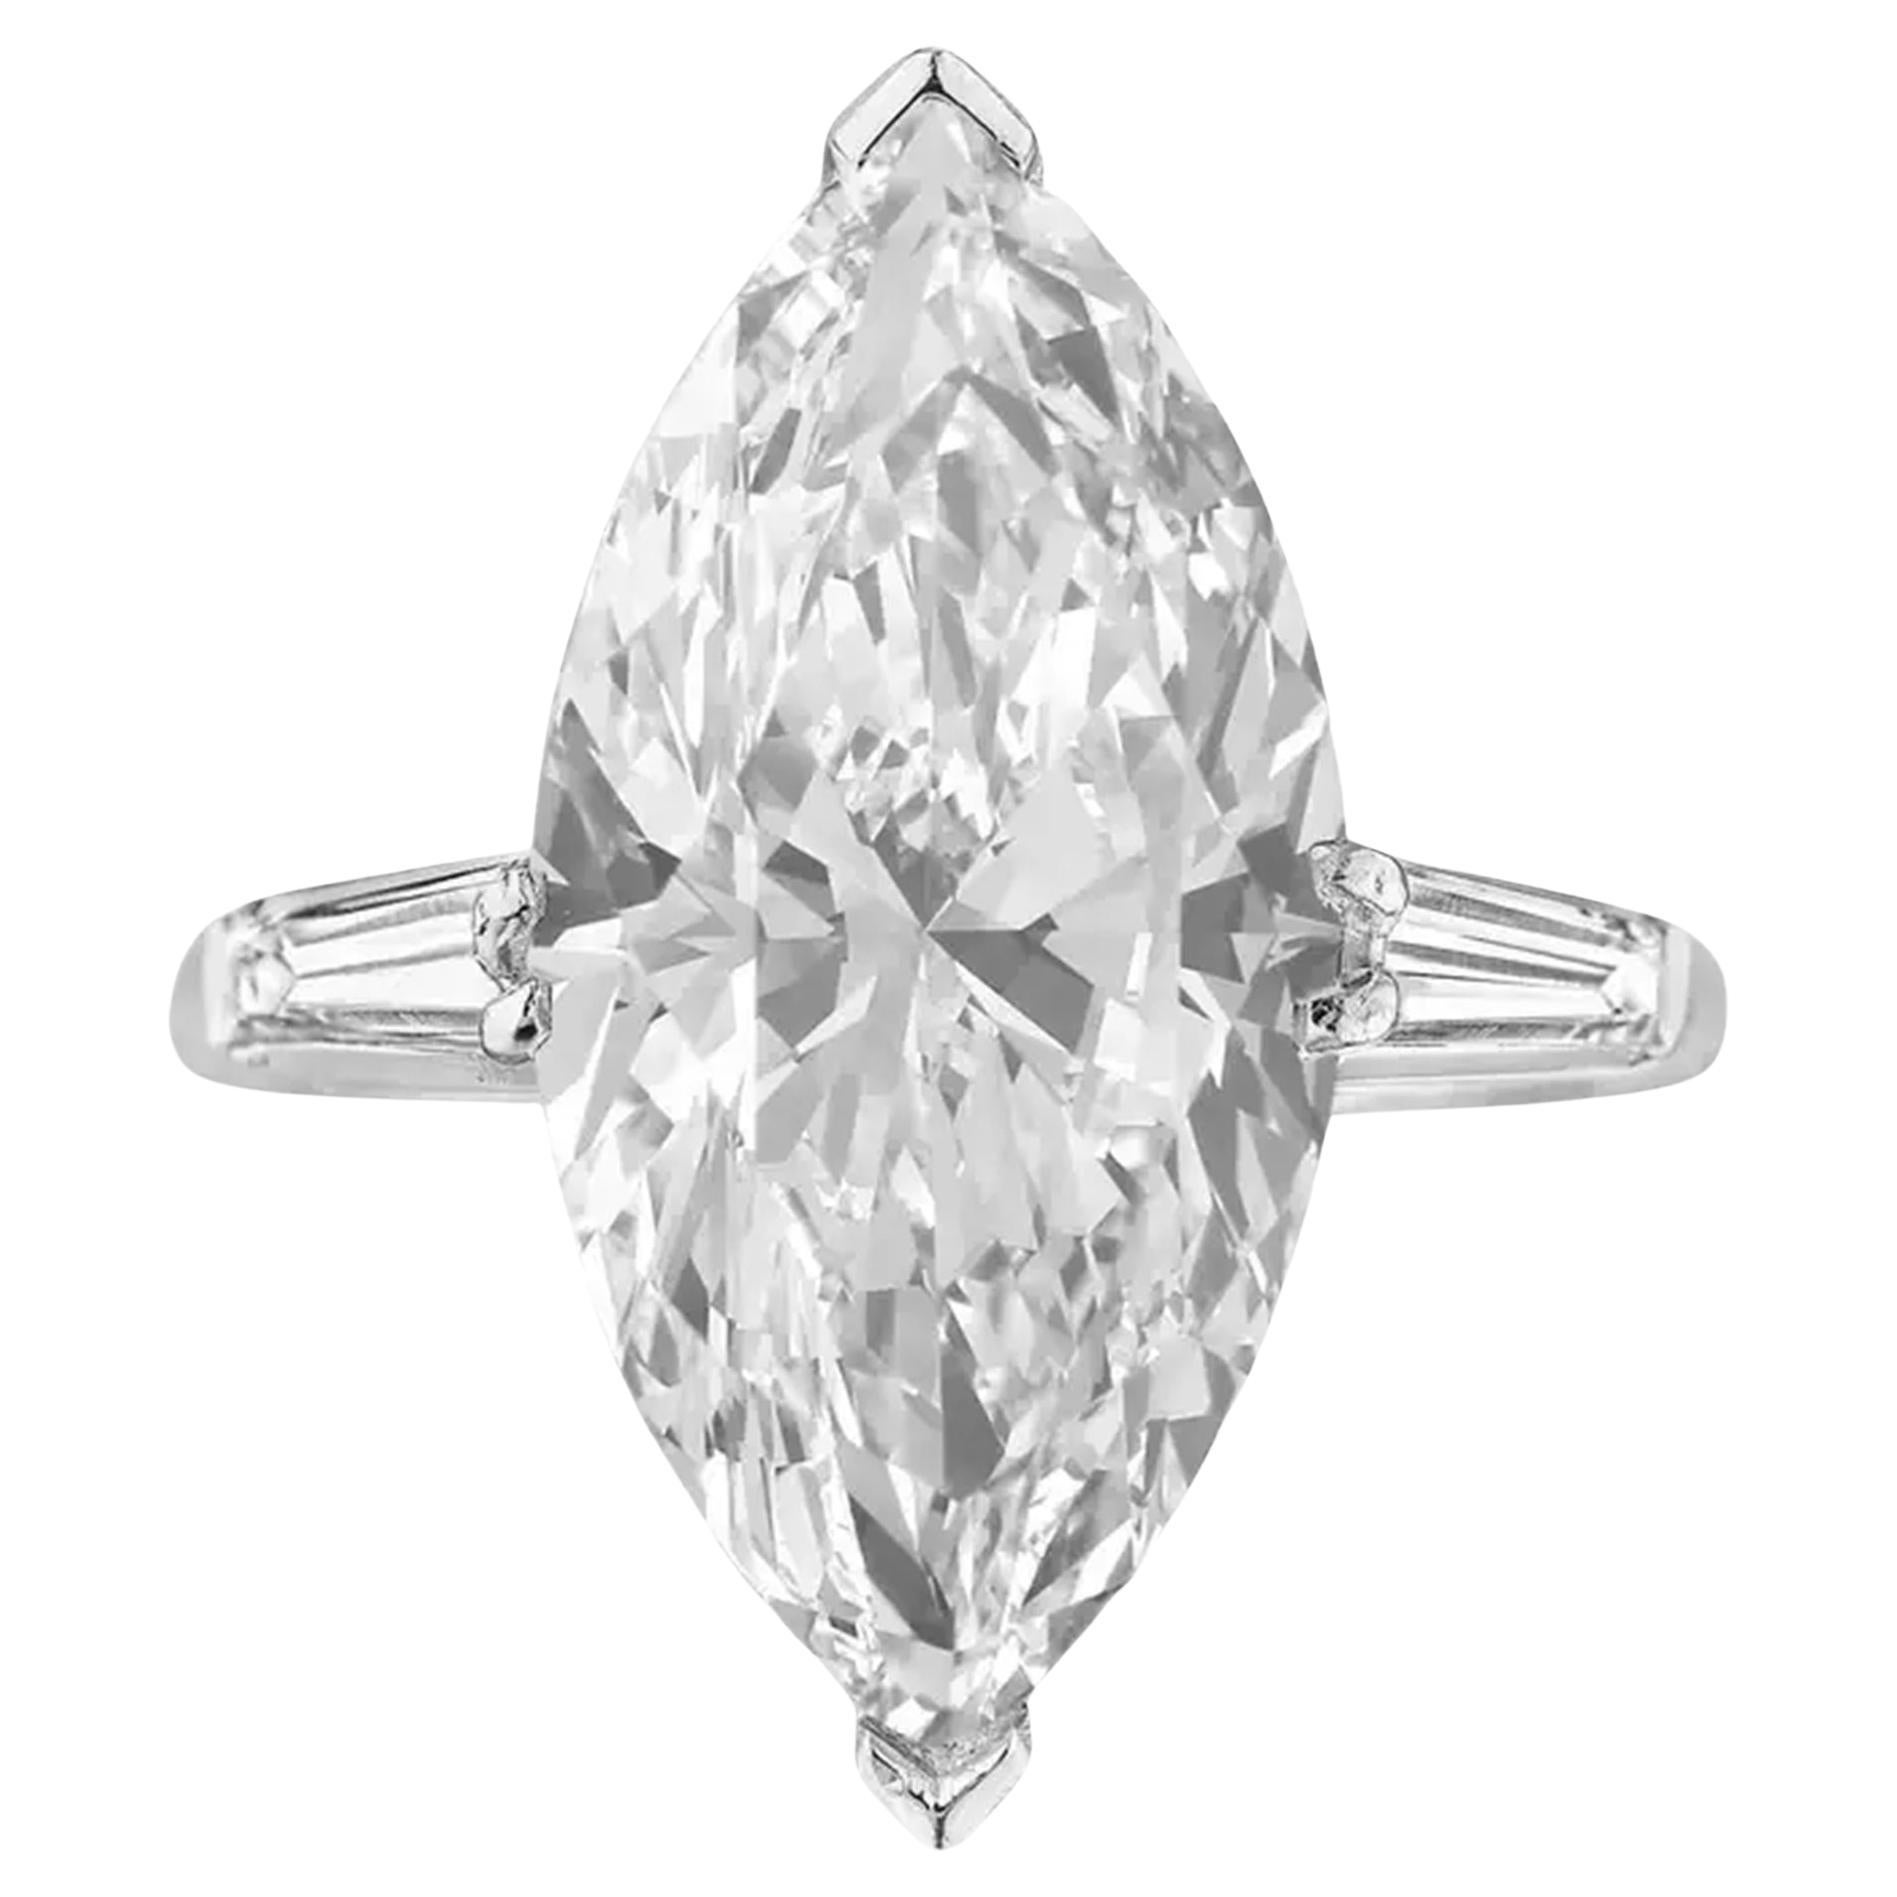 Excepcional anillo de diamantes marquesa de 6,11 quilates con certificado GIA y baguette cónica